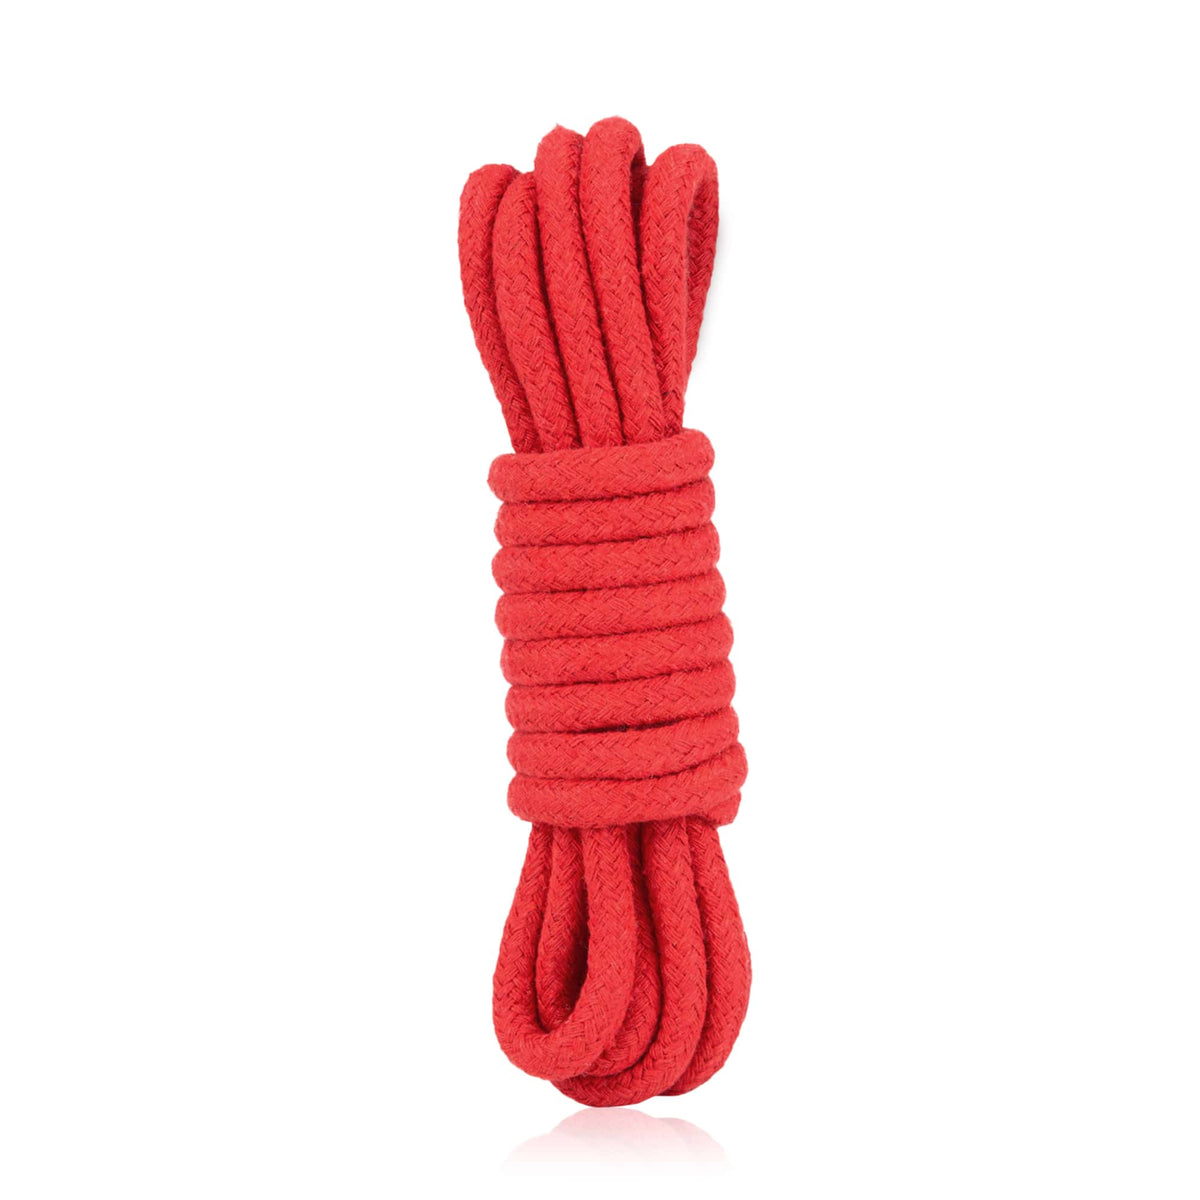 Shibari Japanese Bondage Rope (3m/10ft) in Red - The Cowgirl Sex Machine